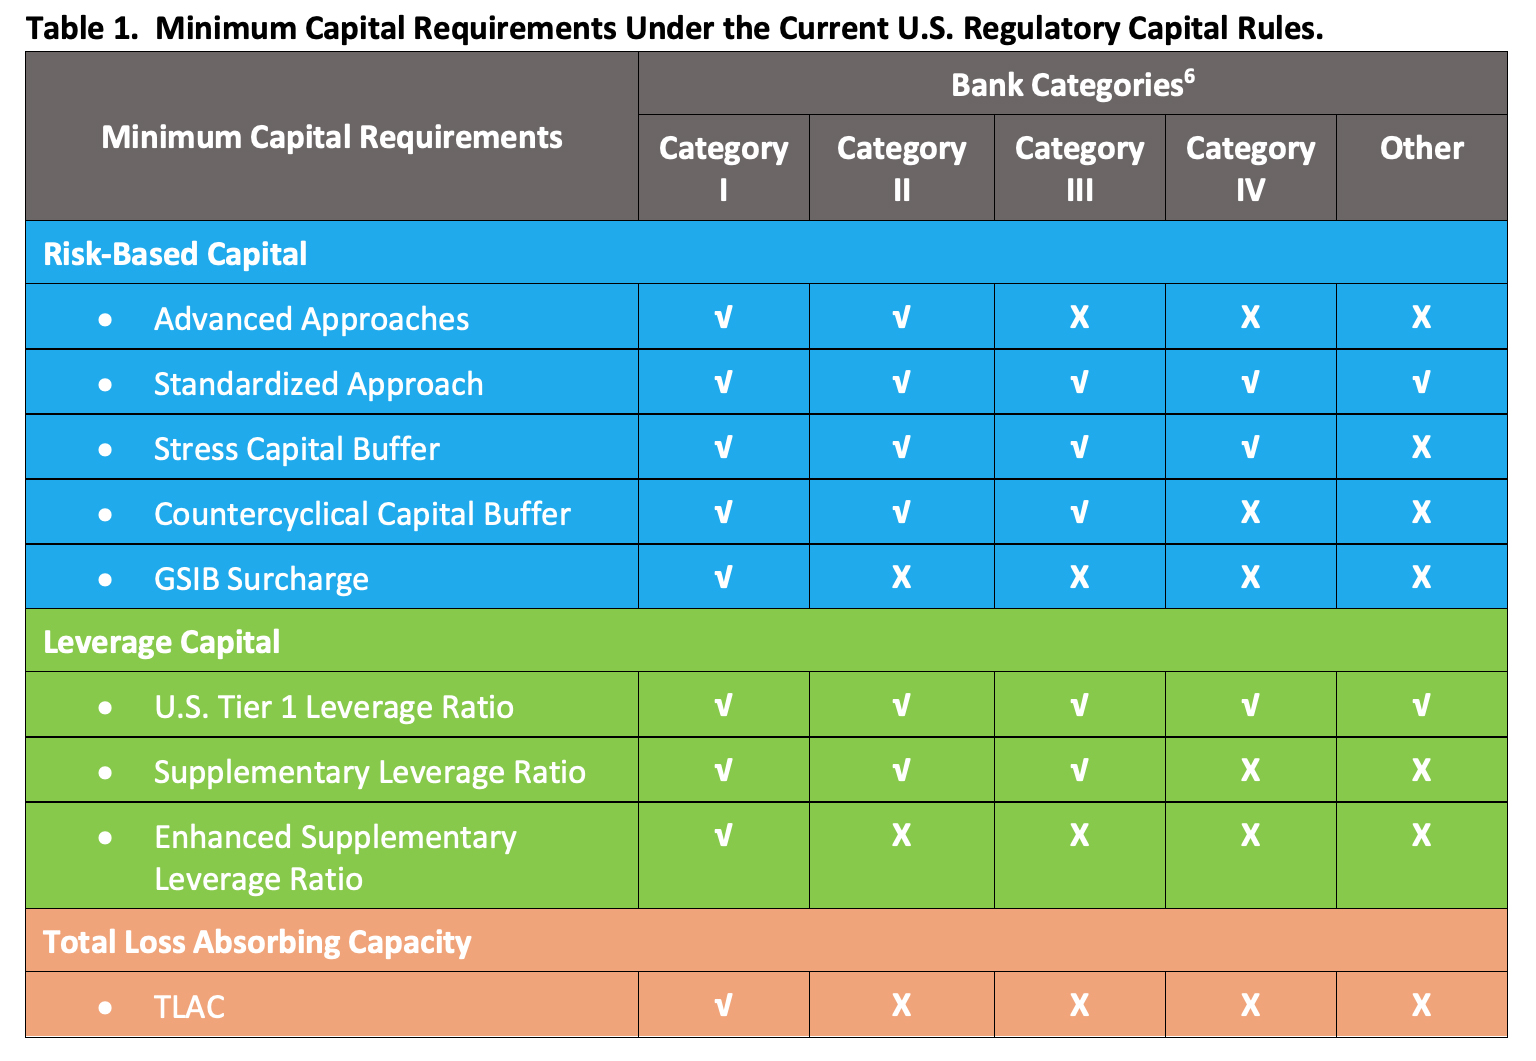 Minimum Capital Requirements Under the Current U.S. Regulatory Capital Rules